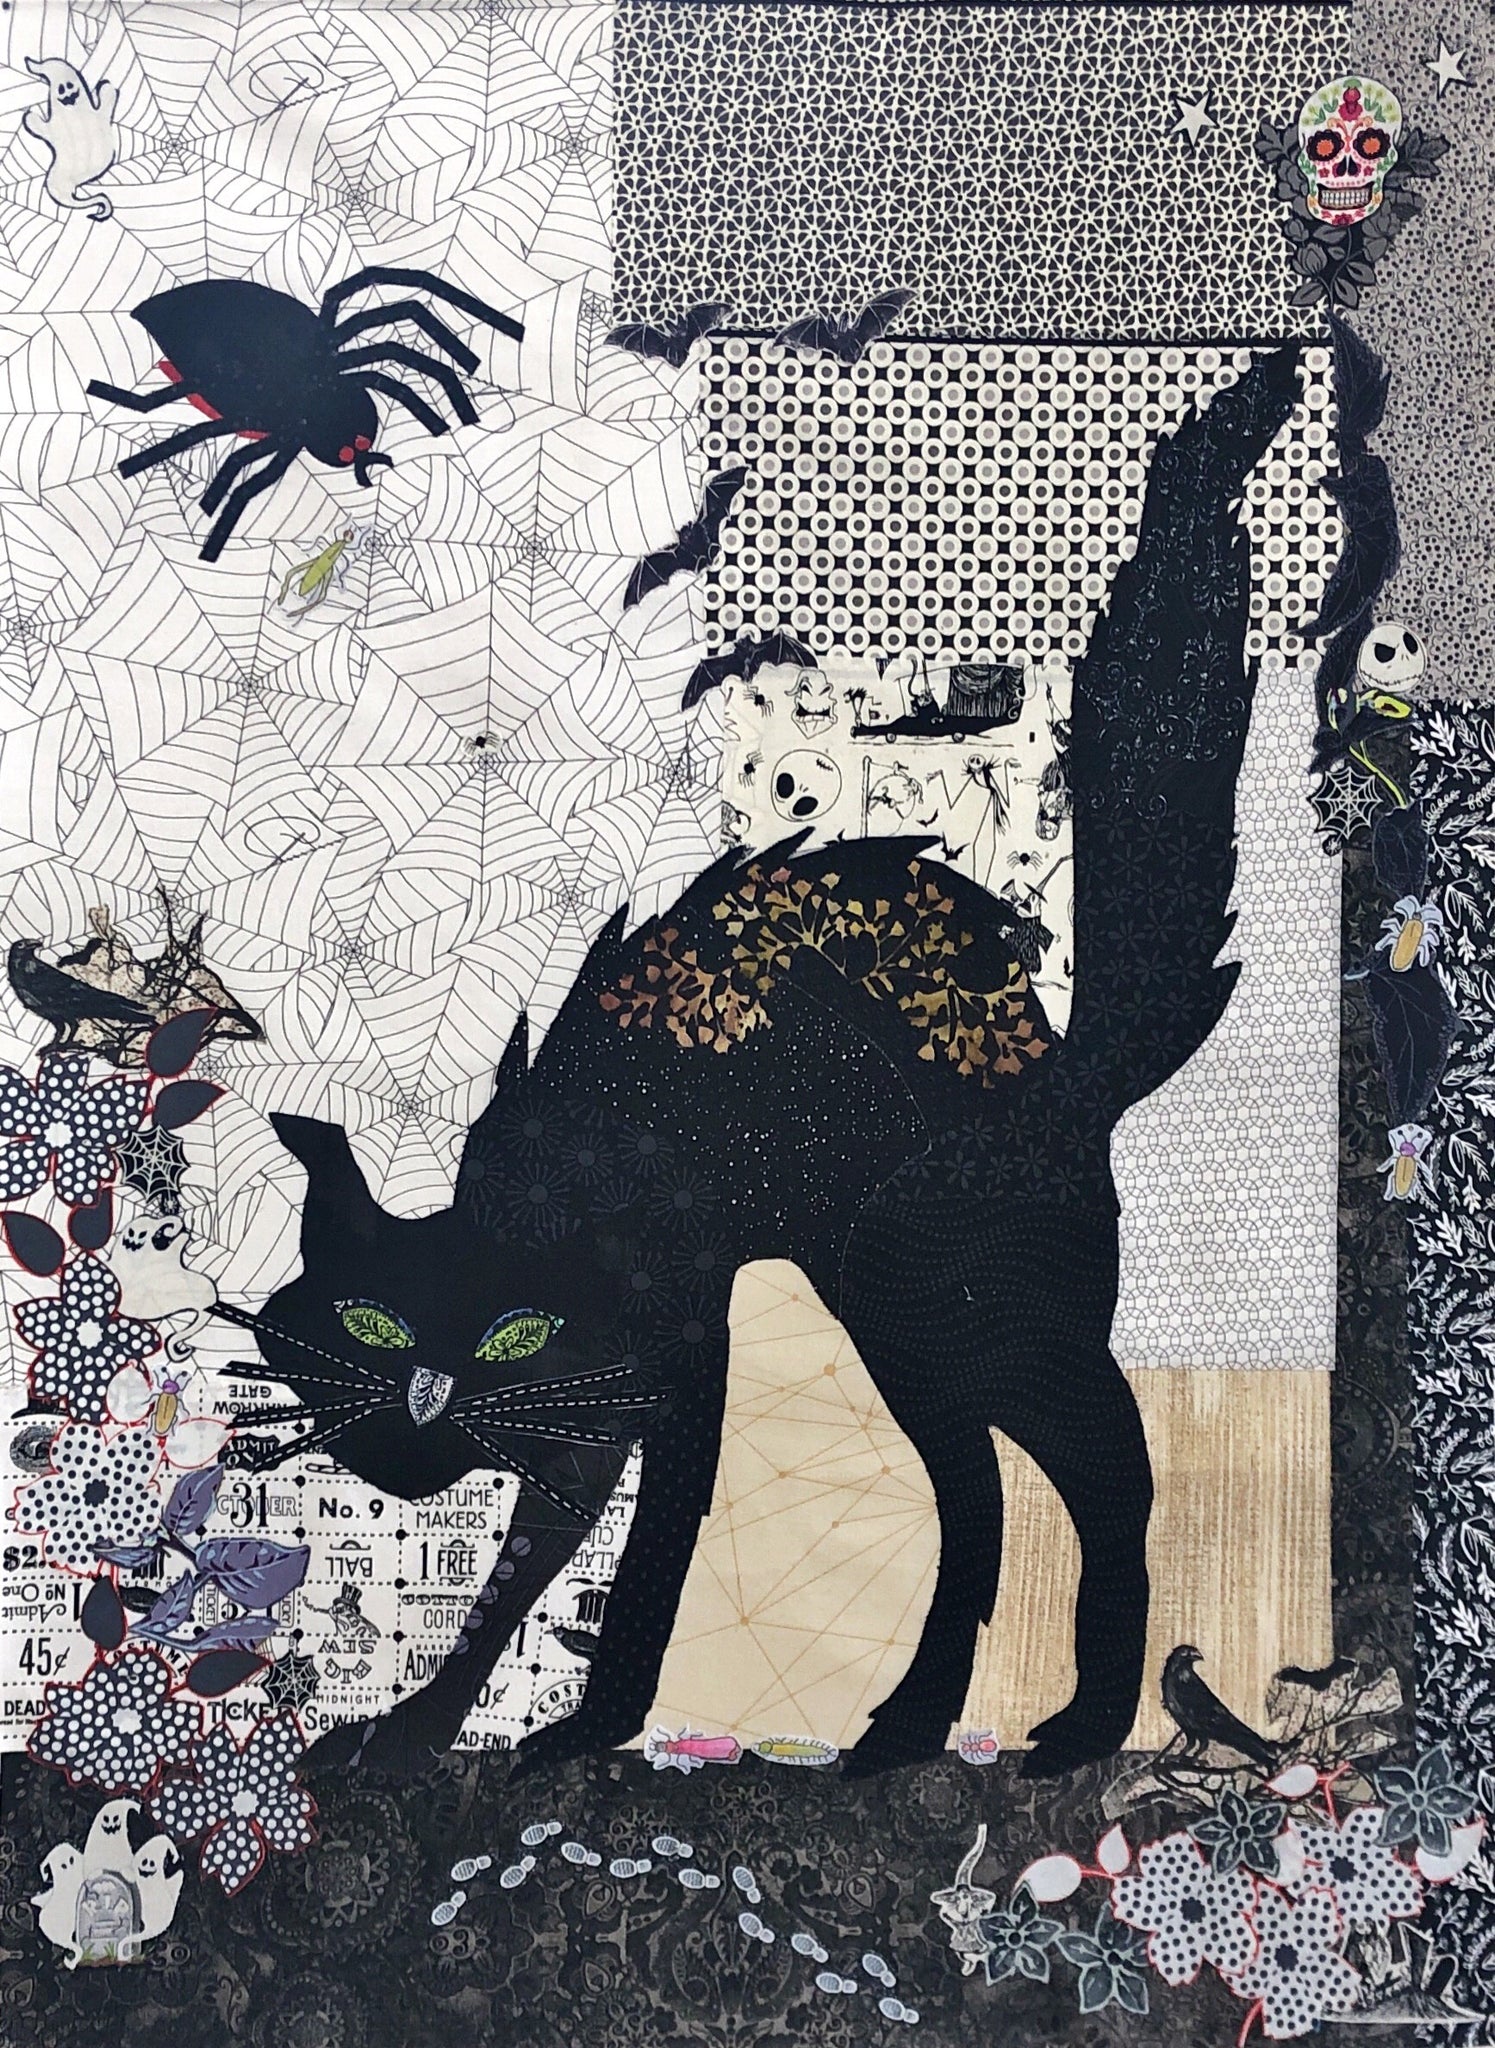 Black Cat Collage Kit by Doris Rice